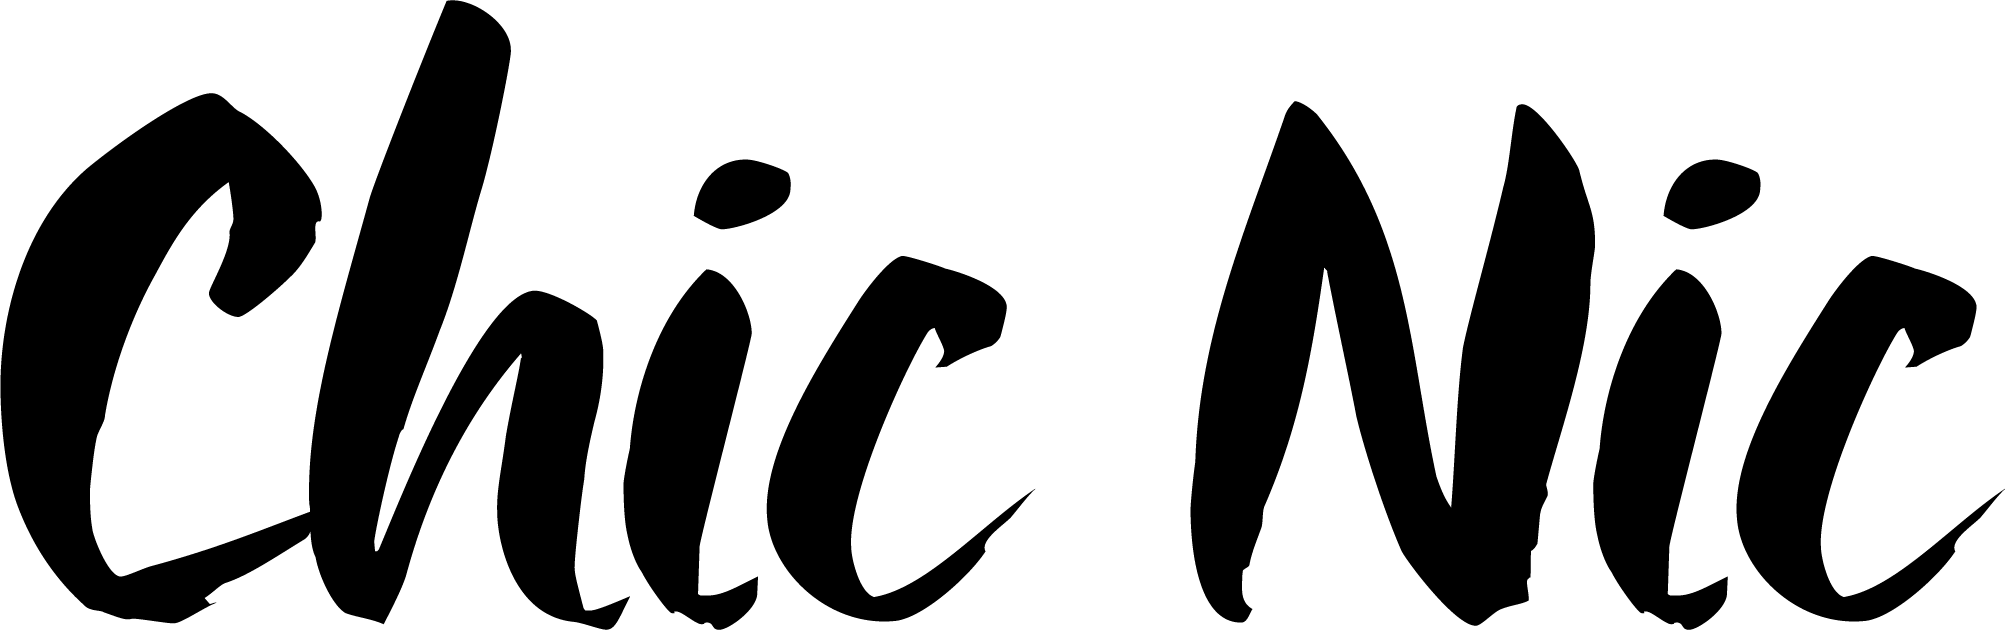 logo-chicnic